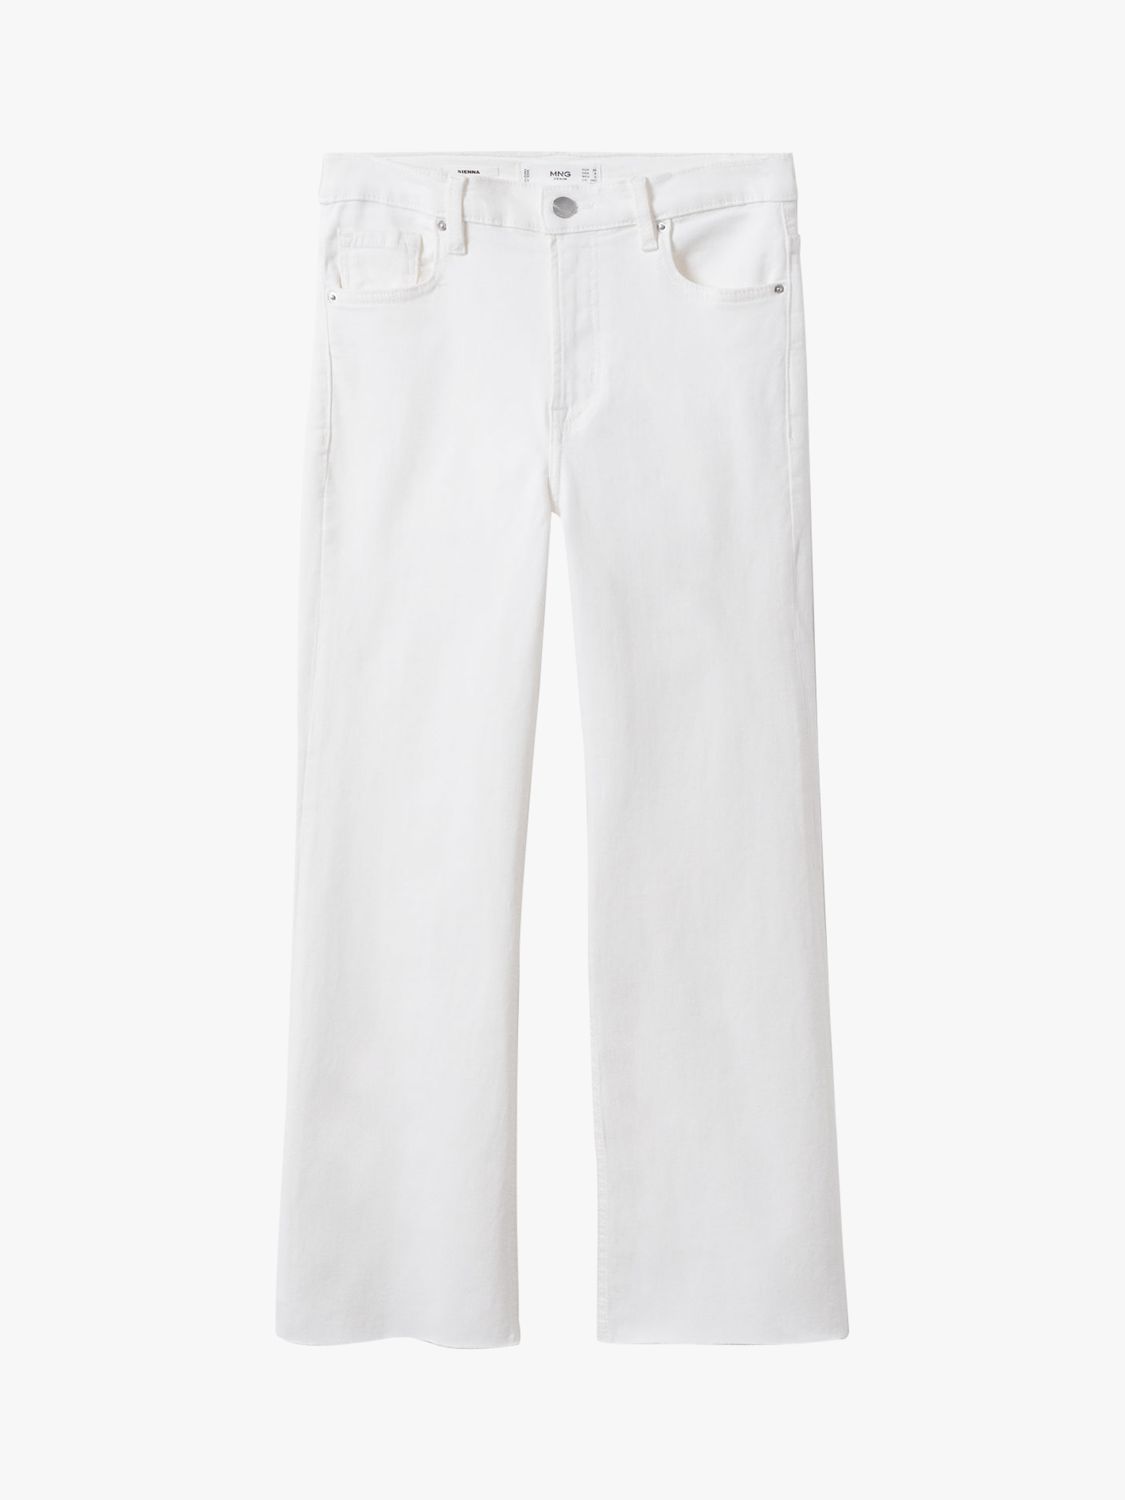 Mango Sienna Cropped Jeans, White, 8